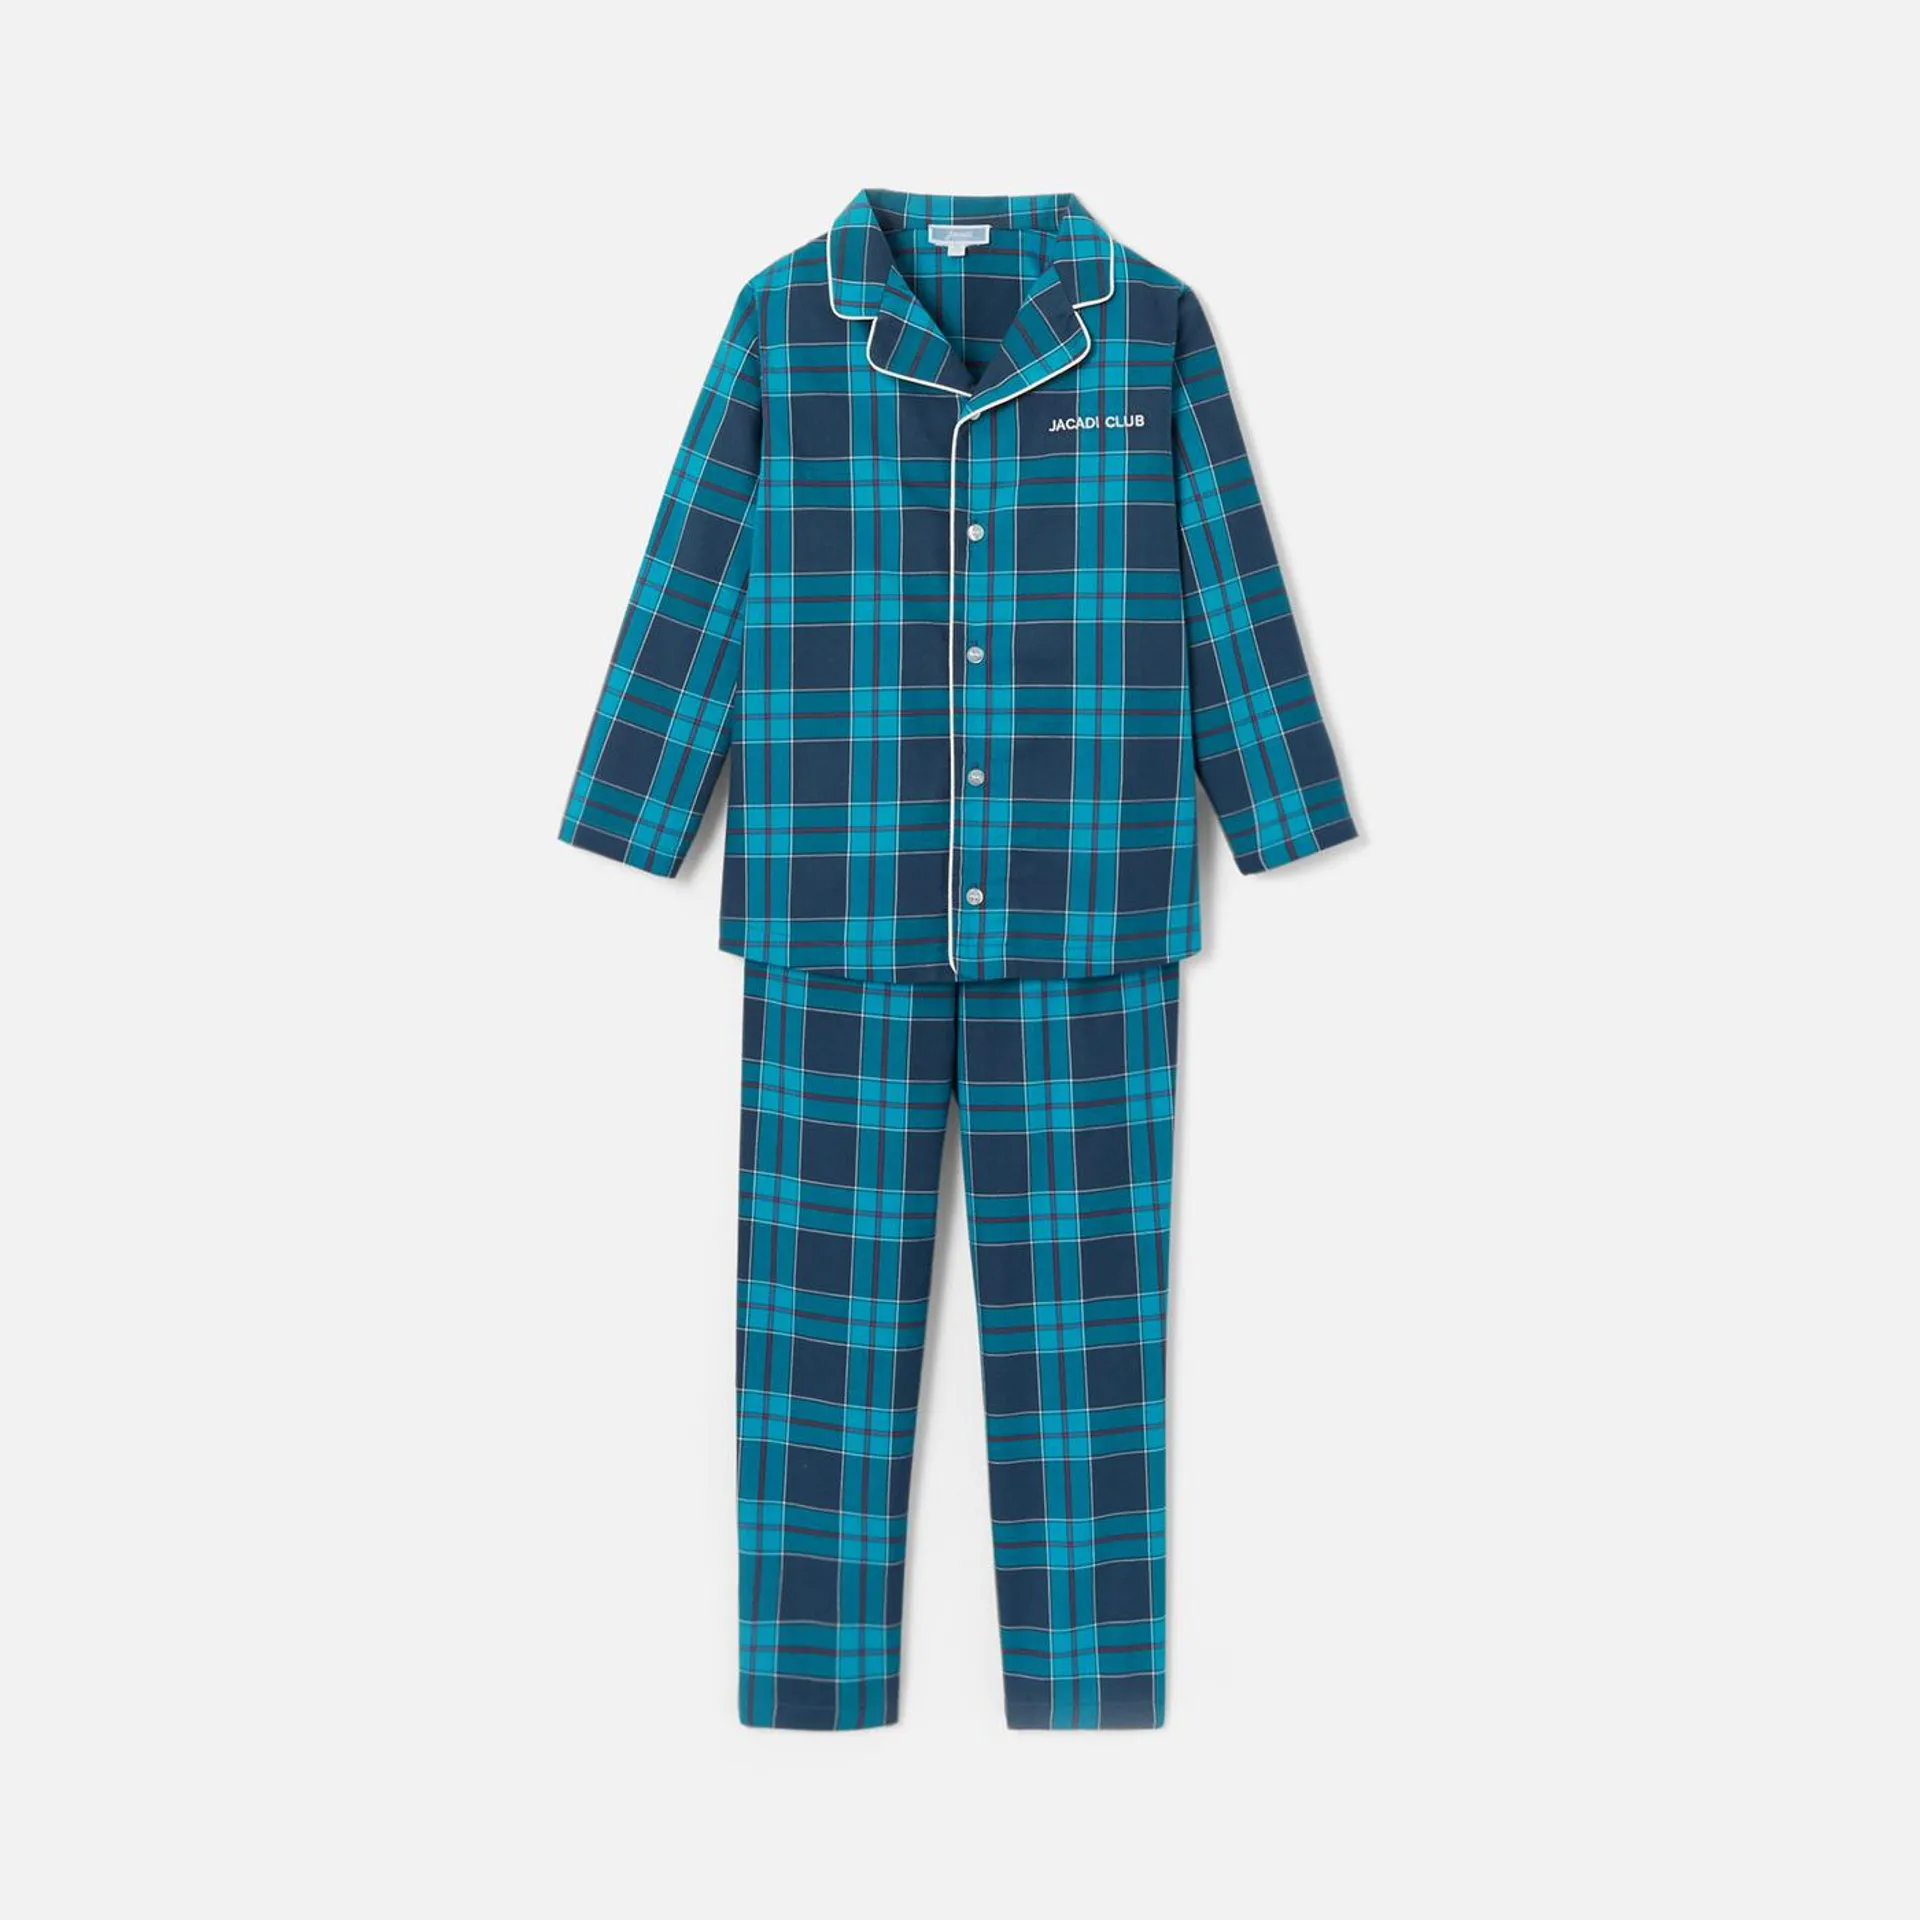 Pijama de franela de niño